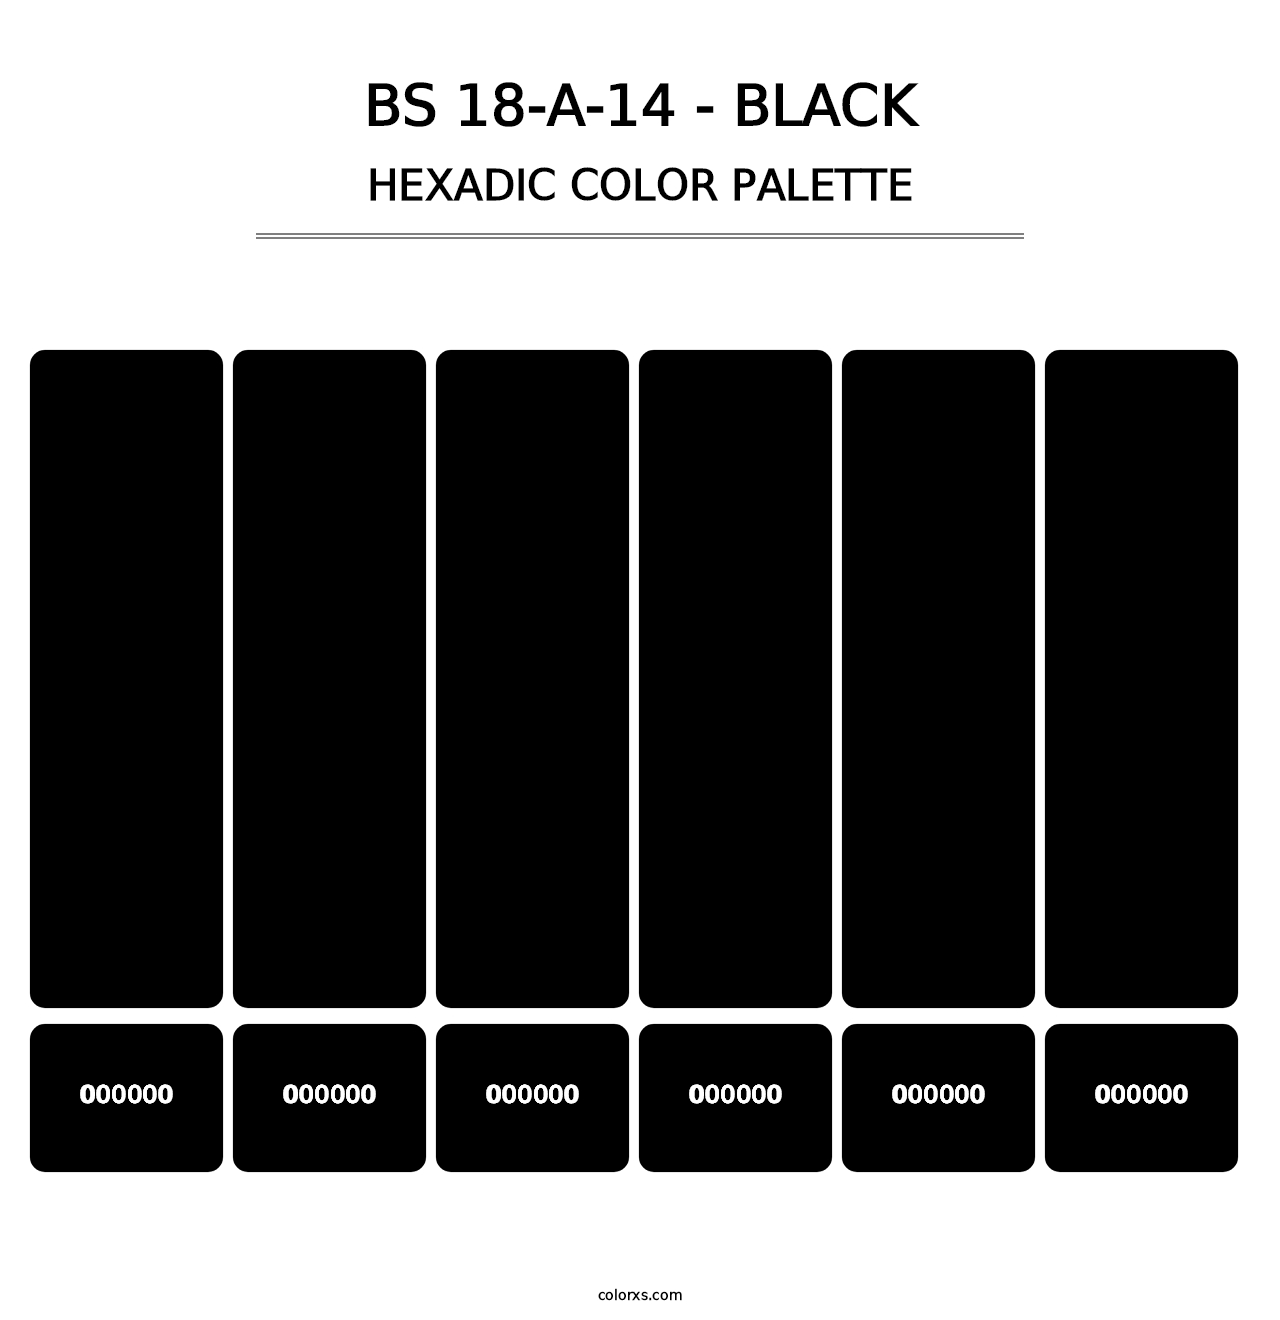 BS 18-A-14 - Black - Hexadic Color Palette